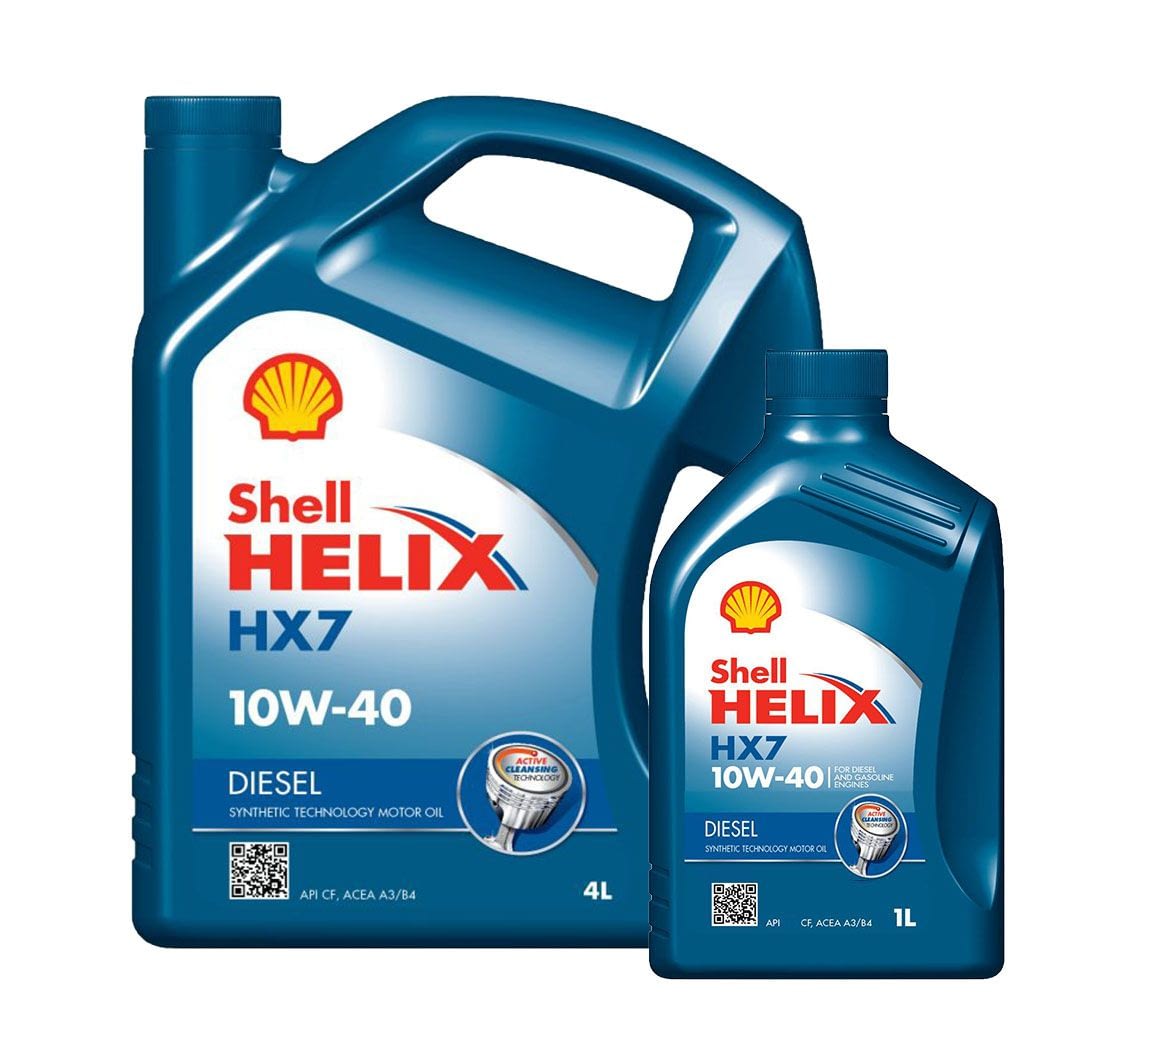 Масло шелл 10. Shell Helix HX 7 Diesel 10 40. Shell Helix hx7 SN Plus 10w-40 1л. Масло Shell 10w 40 hx7 дизель. Масло моторное Shell Helix hx7 10w-40, 1l.